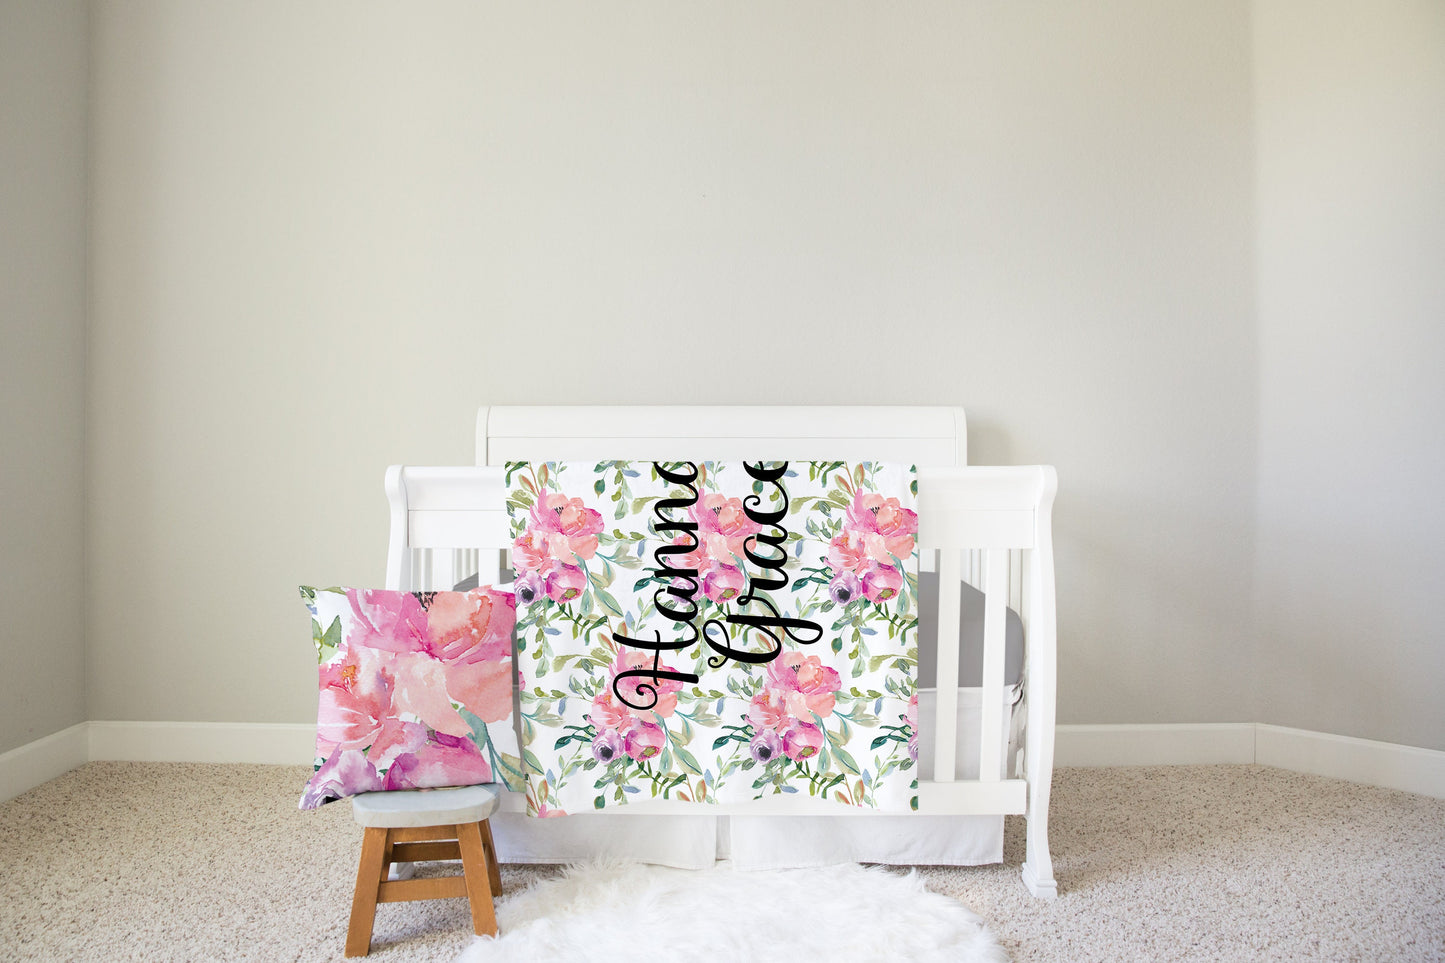 Vintage Floral Personalized Baby Blanket - Floral Name Blanket - Vintage Floral Nursery - Baby Shower Gift for Girl - Custom Name Blanket